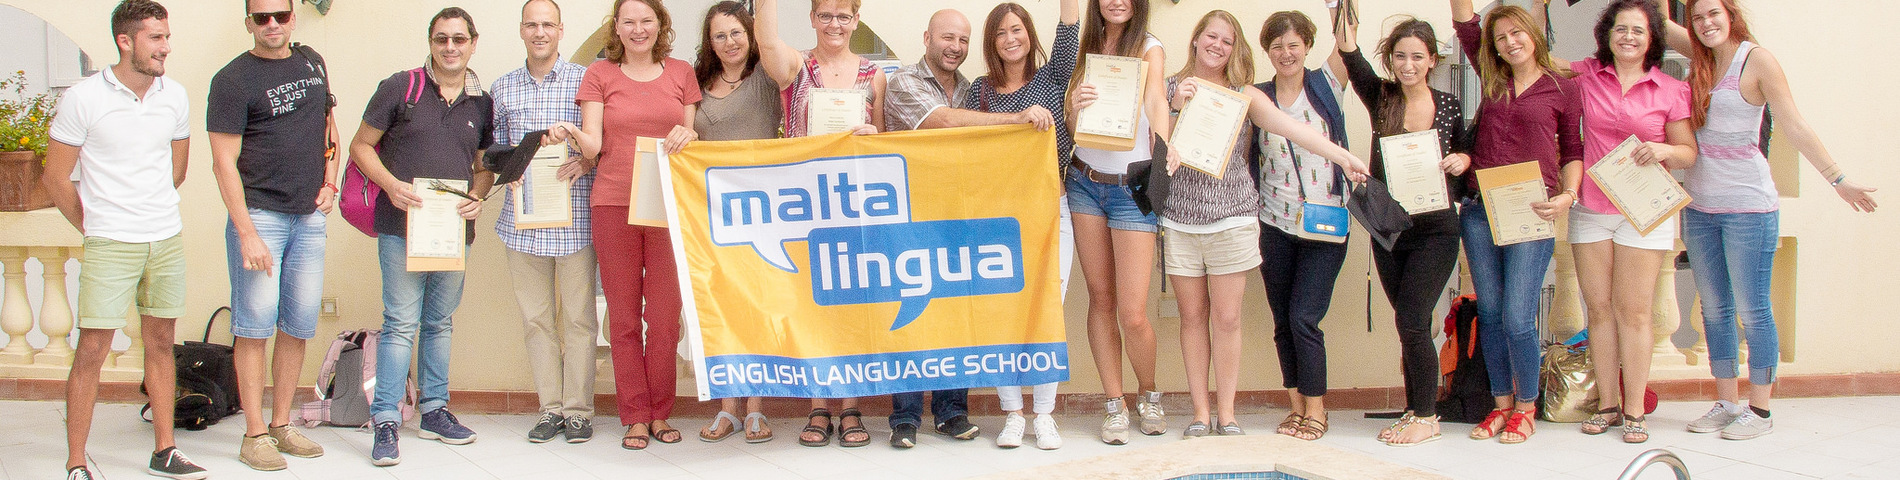 Maltalingua School of English画像1